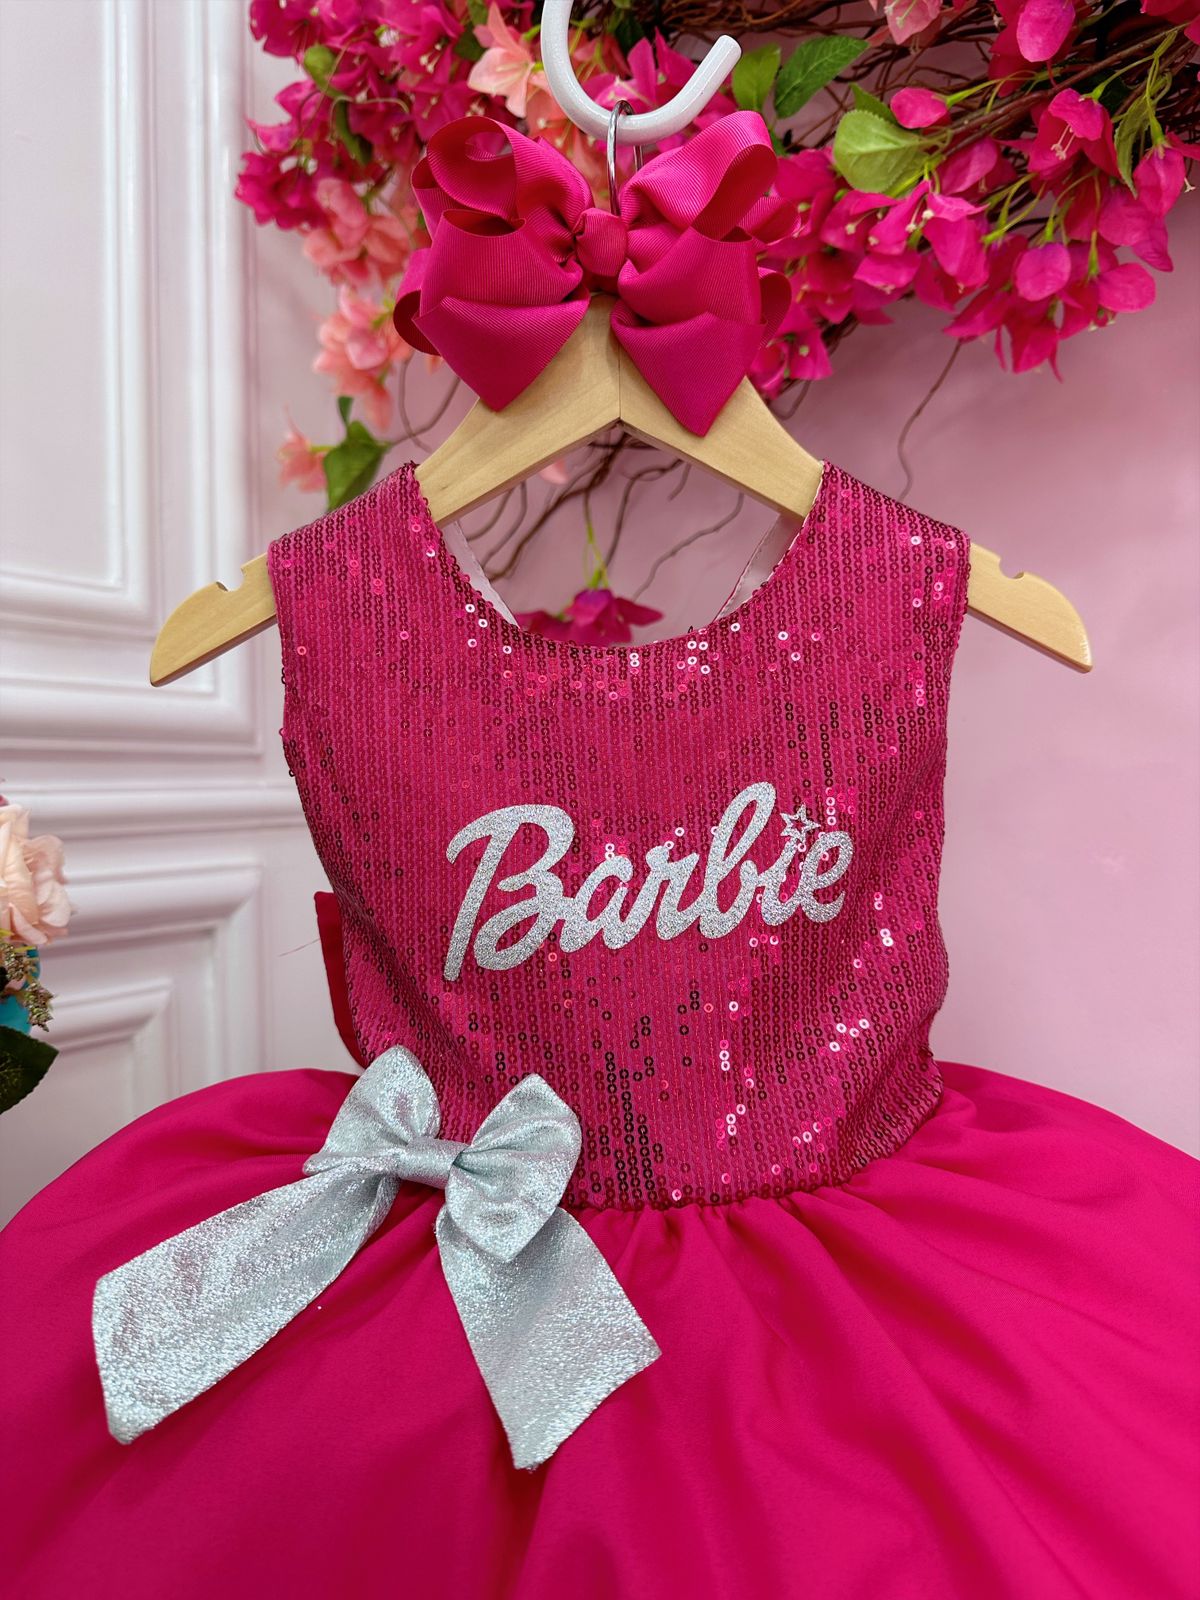 Vestido Infantil Barbie Paetê Pink  Floresça Ateliê - Floresça Ateliê  Infantil